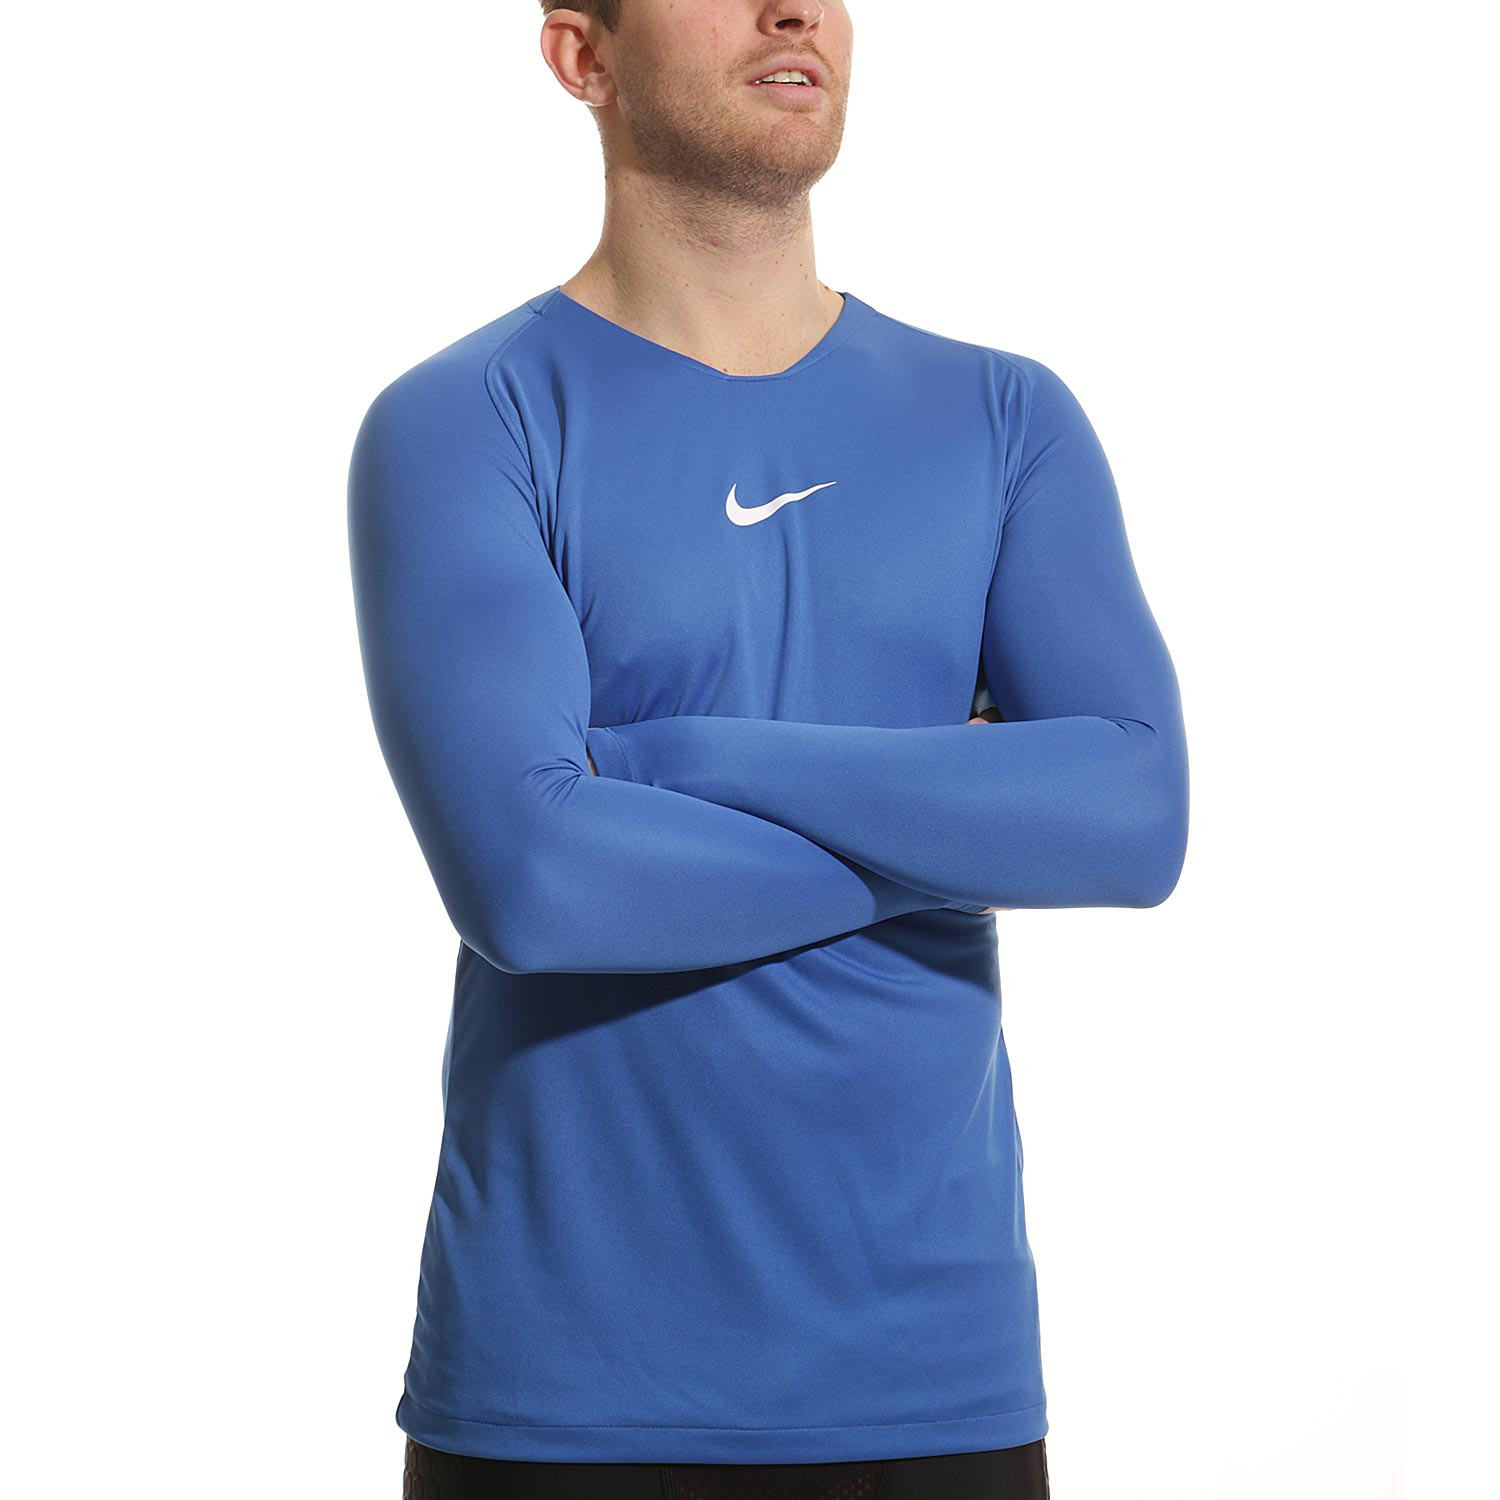 filtrar Limpiar el piso problema Camiseta térmica manga larga Nike azul |futbolmania